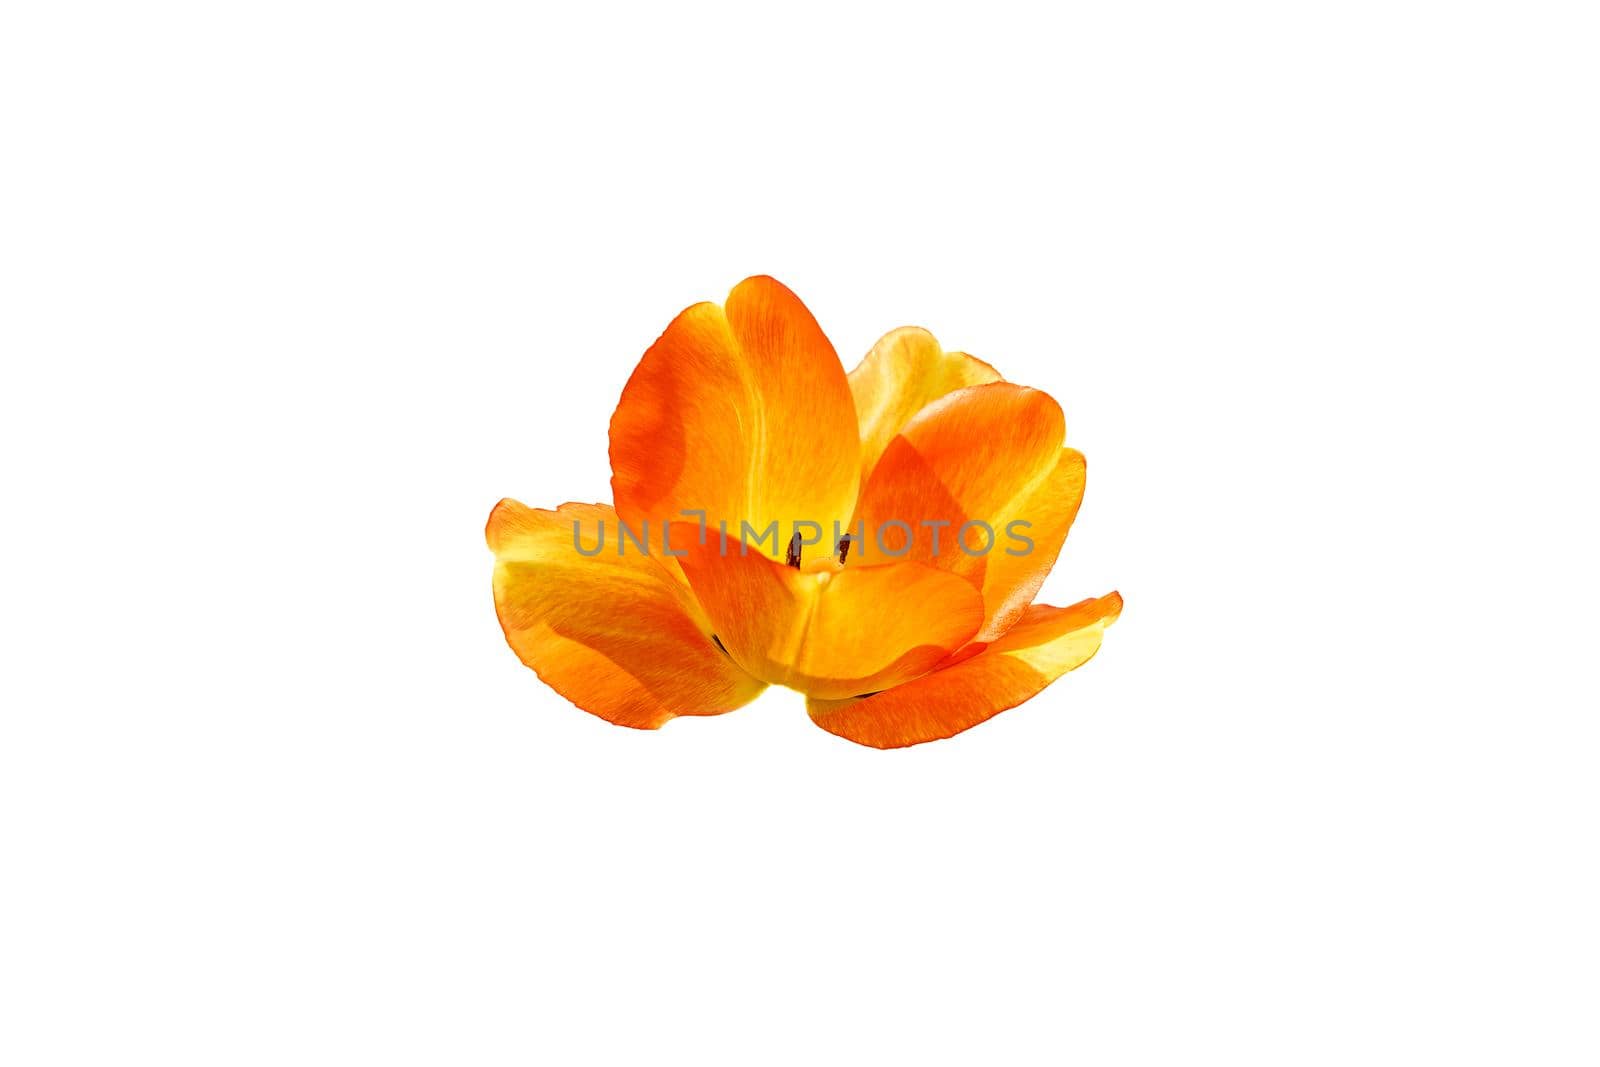 Bright orange magical gladiolus flower isolated on white background by jovani68